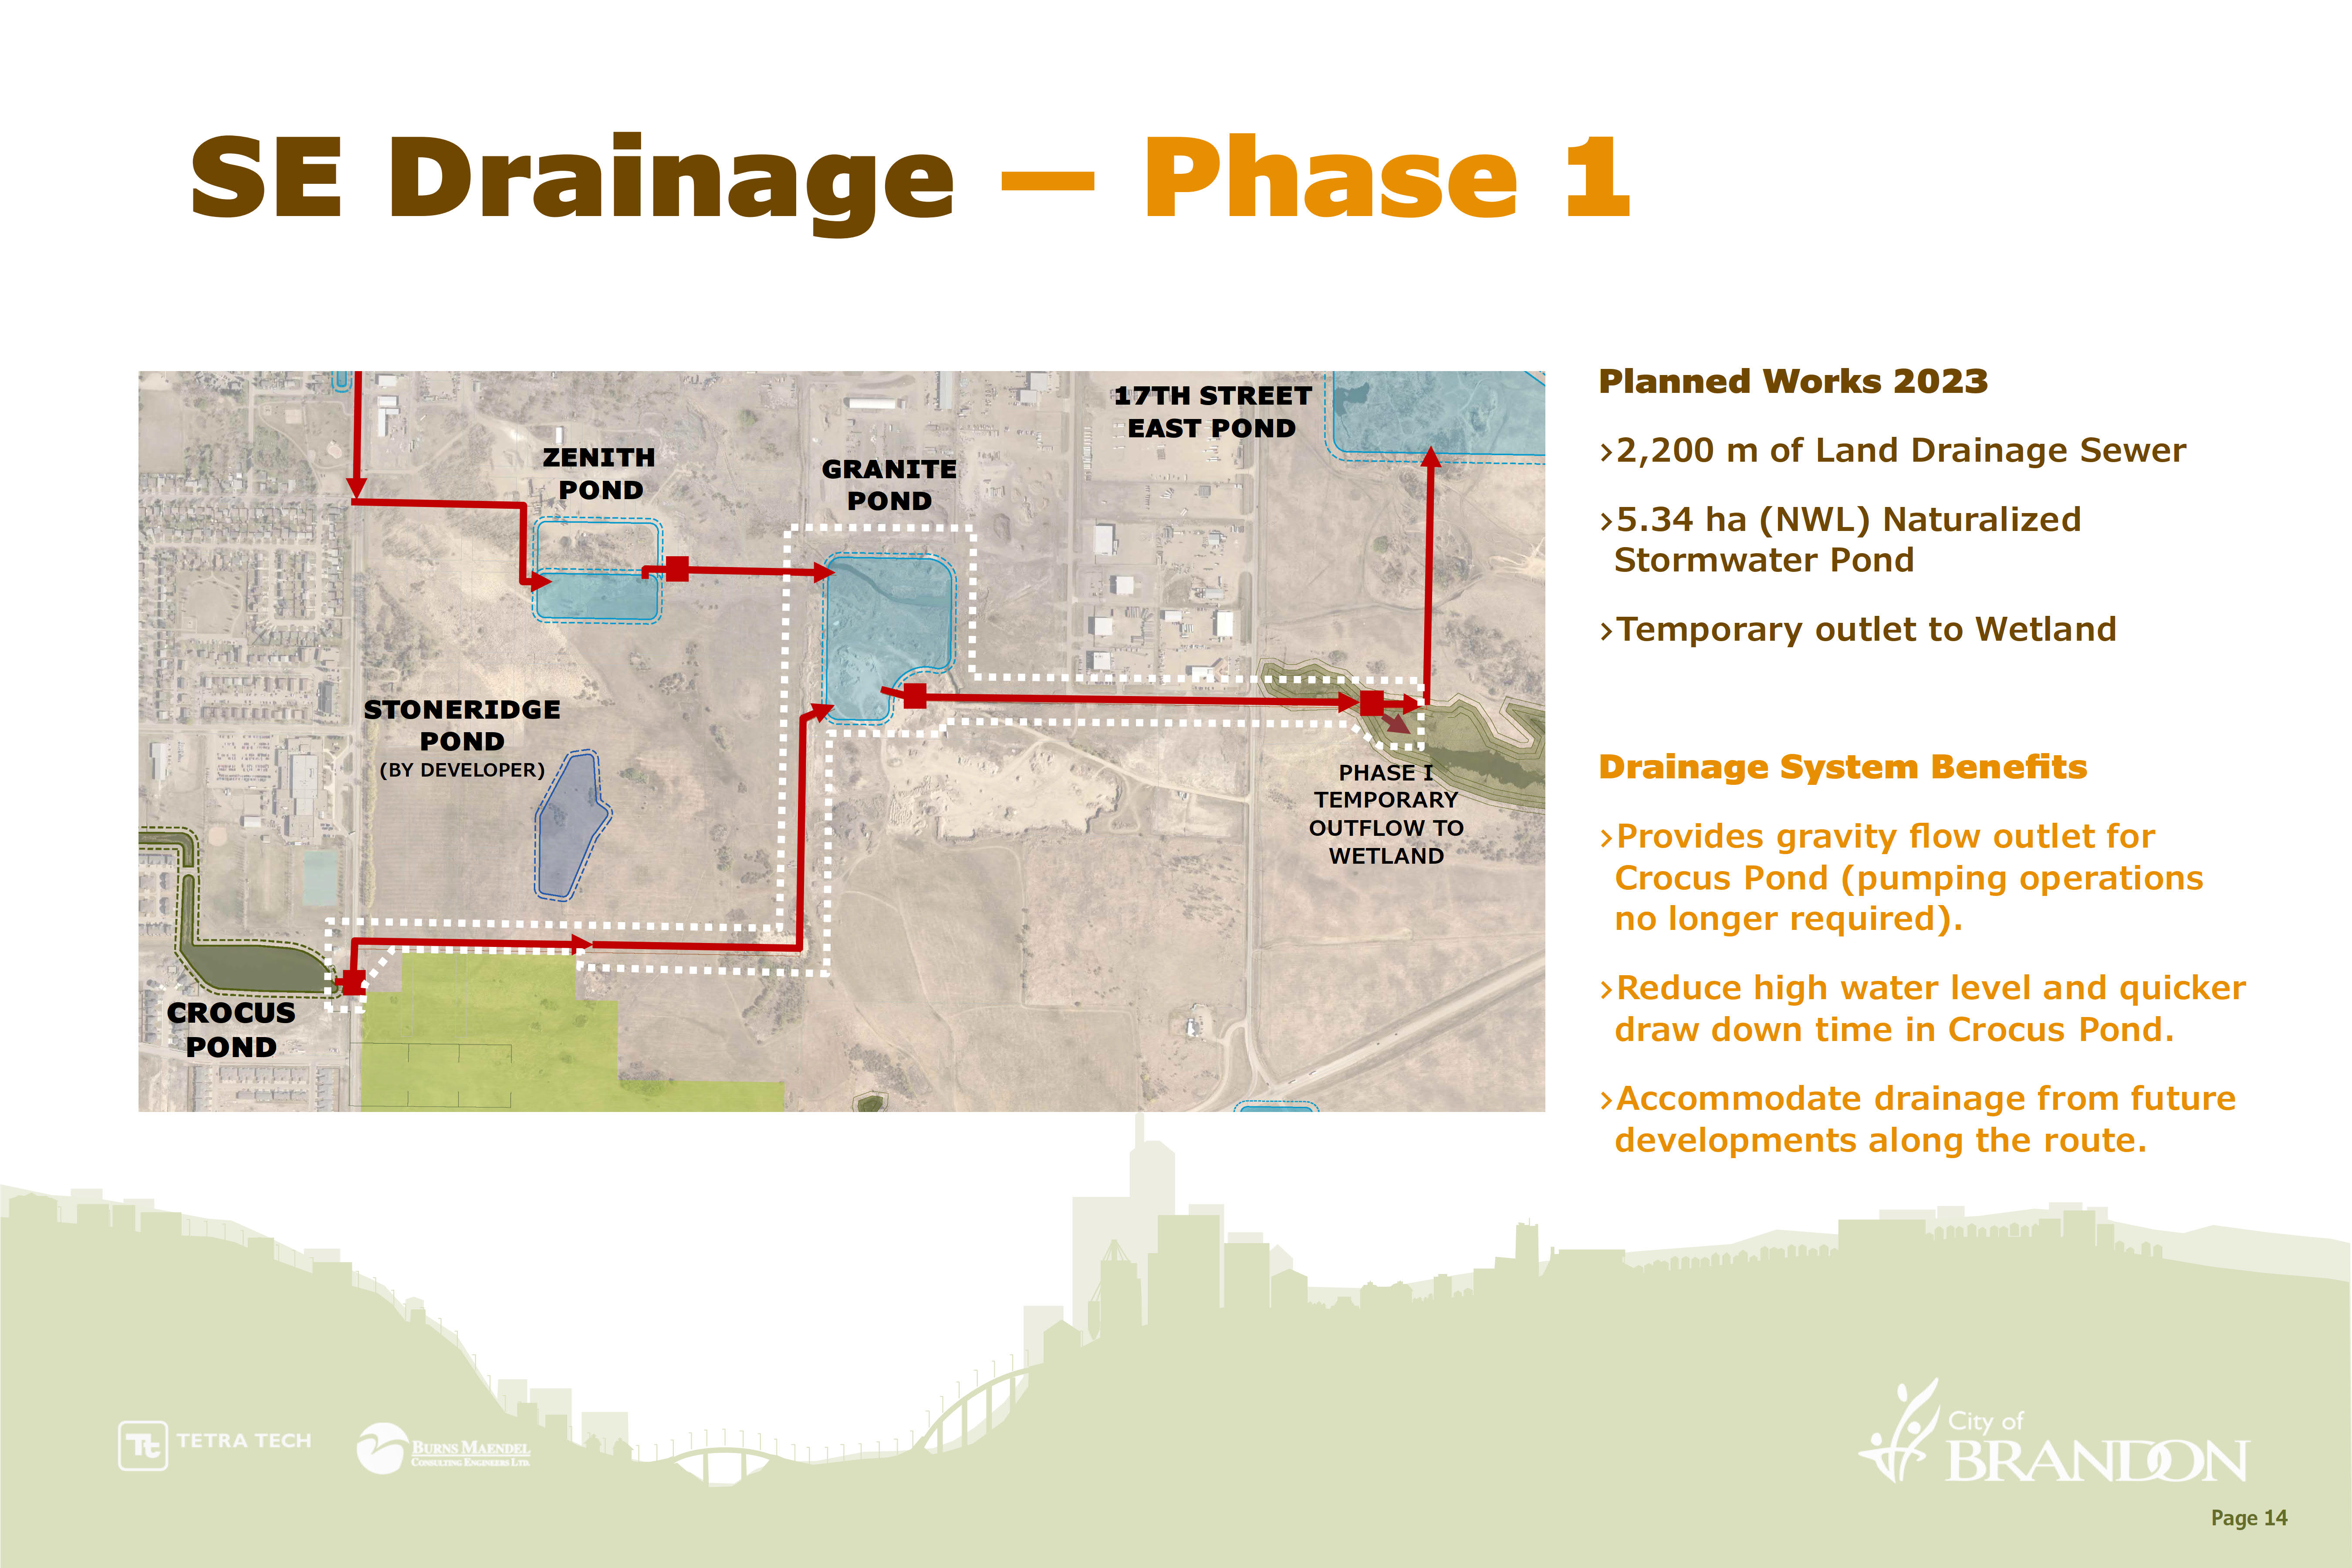 Southeast Drainage - Phase 1